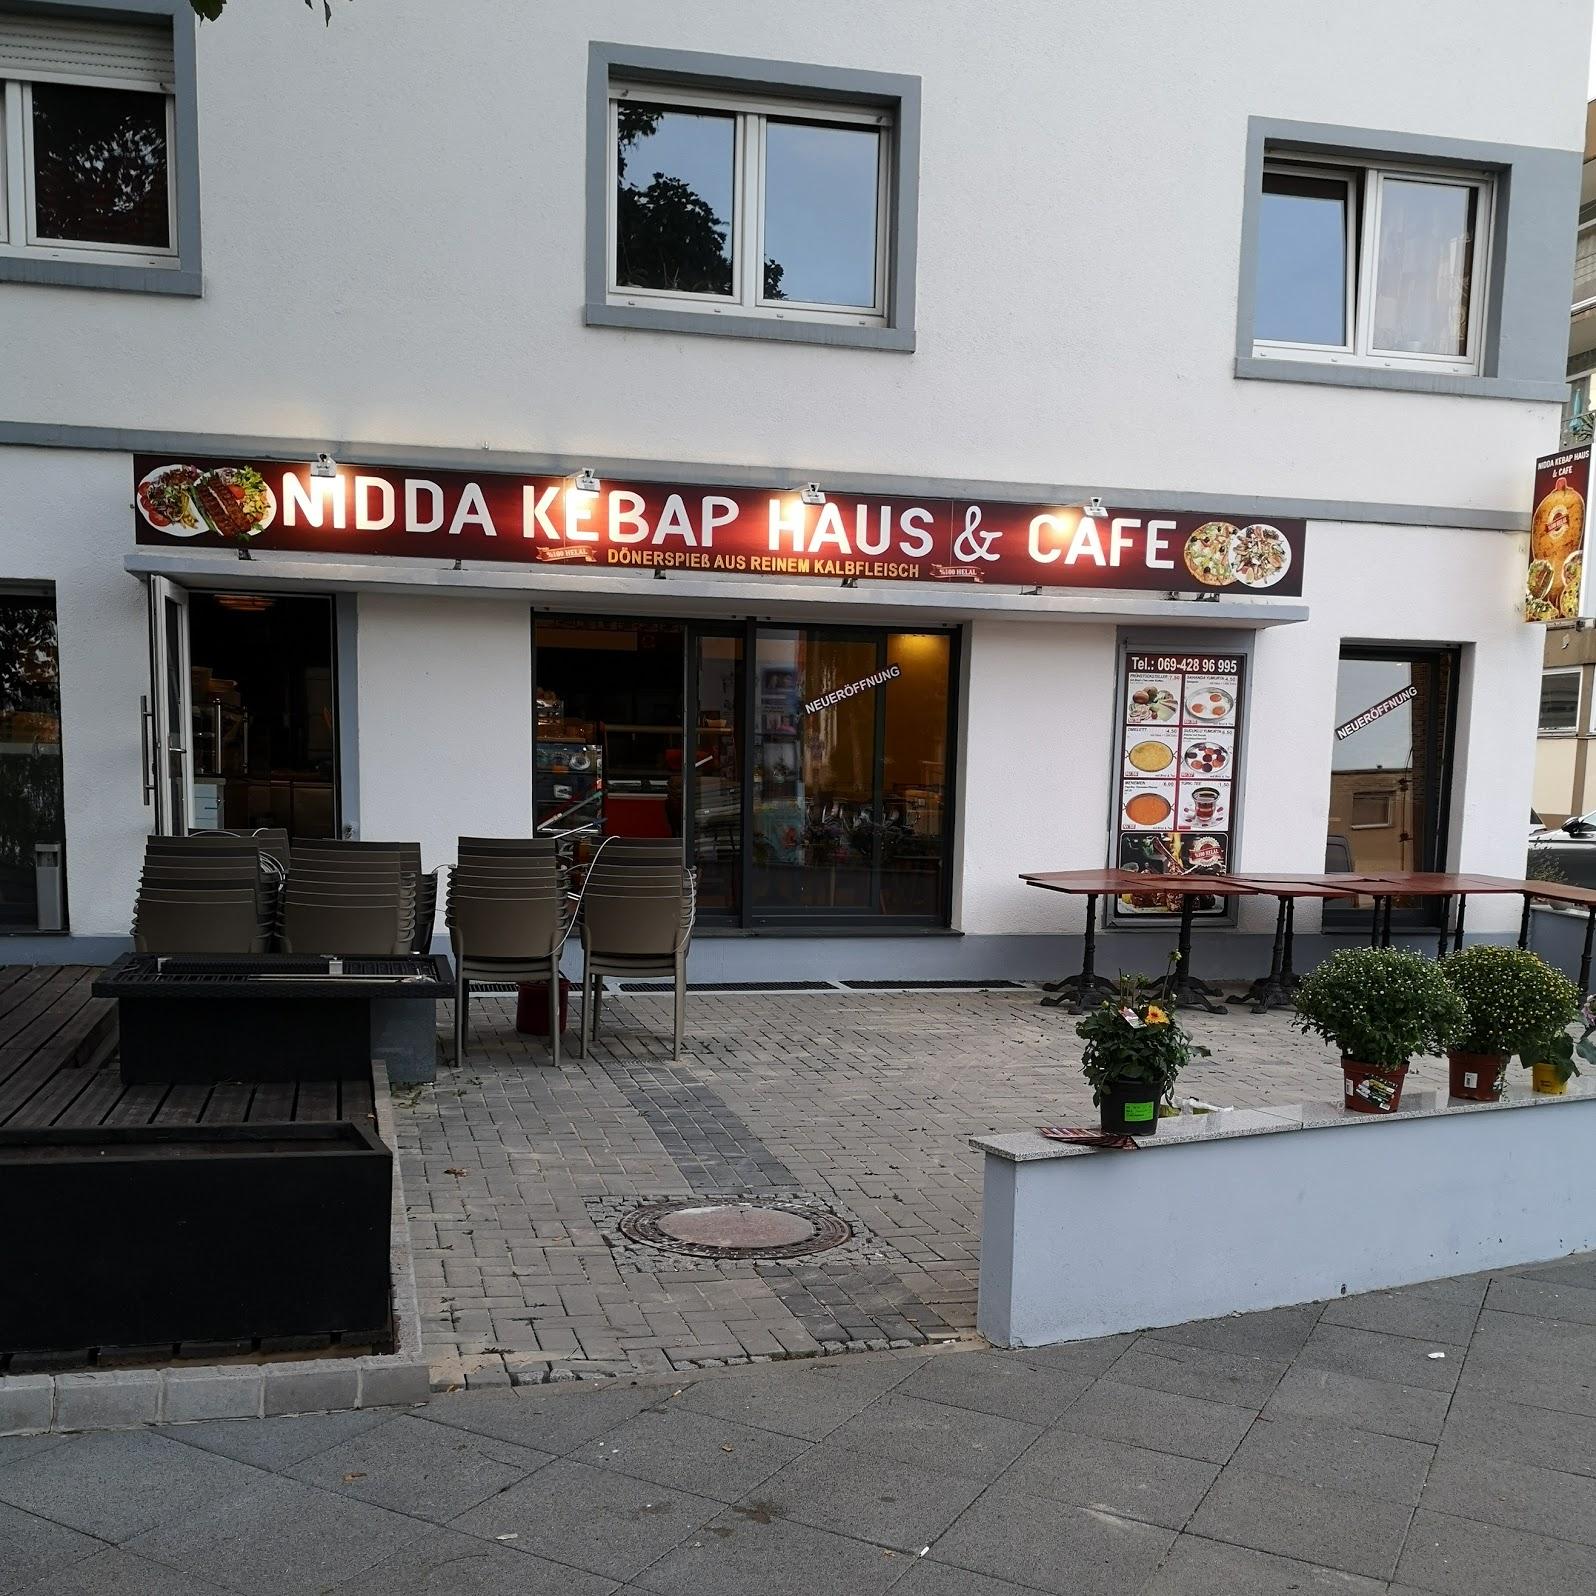 Restaurant "Nidda Kebap Haus & Cafe" in Frankfurt am Main